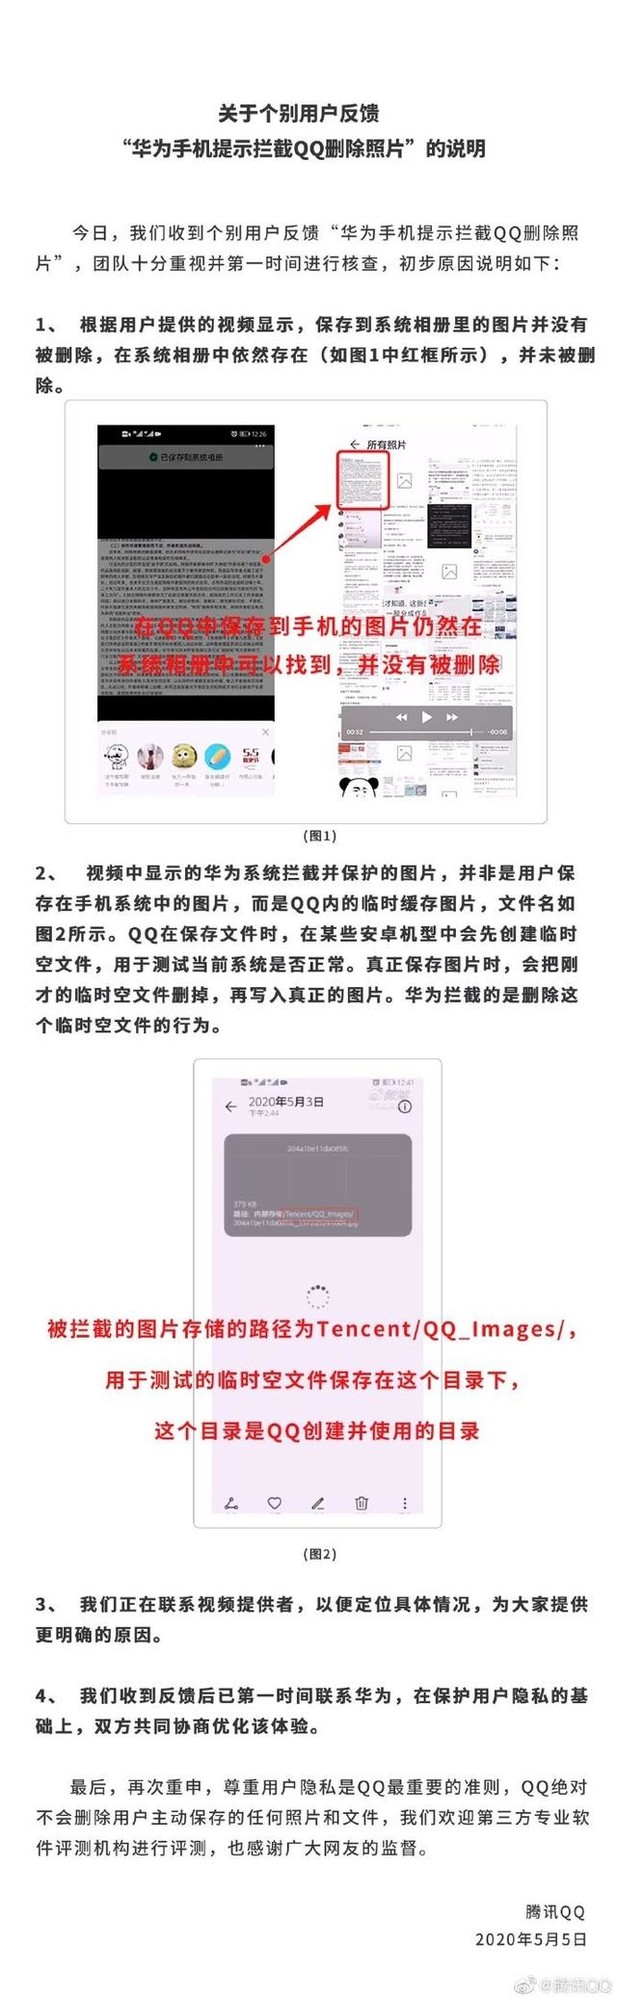 QQ回应偷删照片问题：华为手机拦截的其实是临时文件